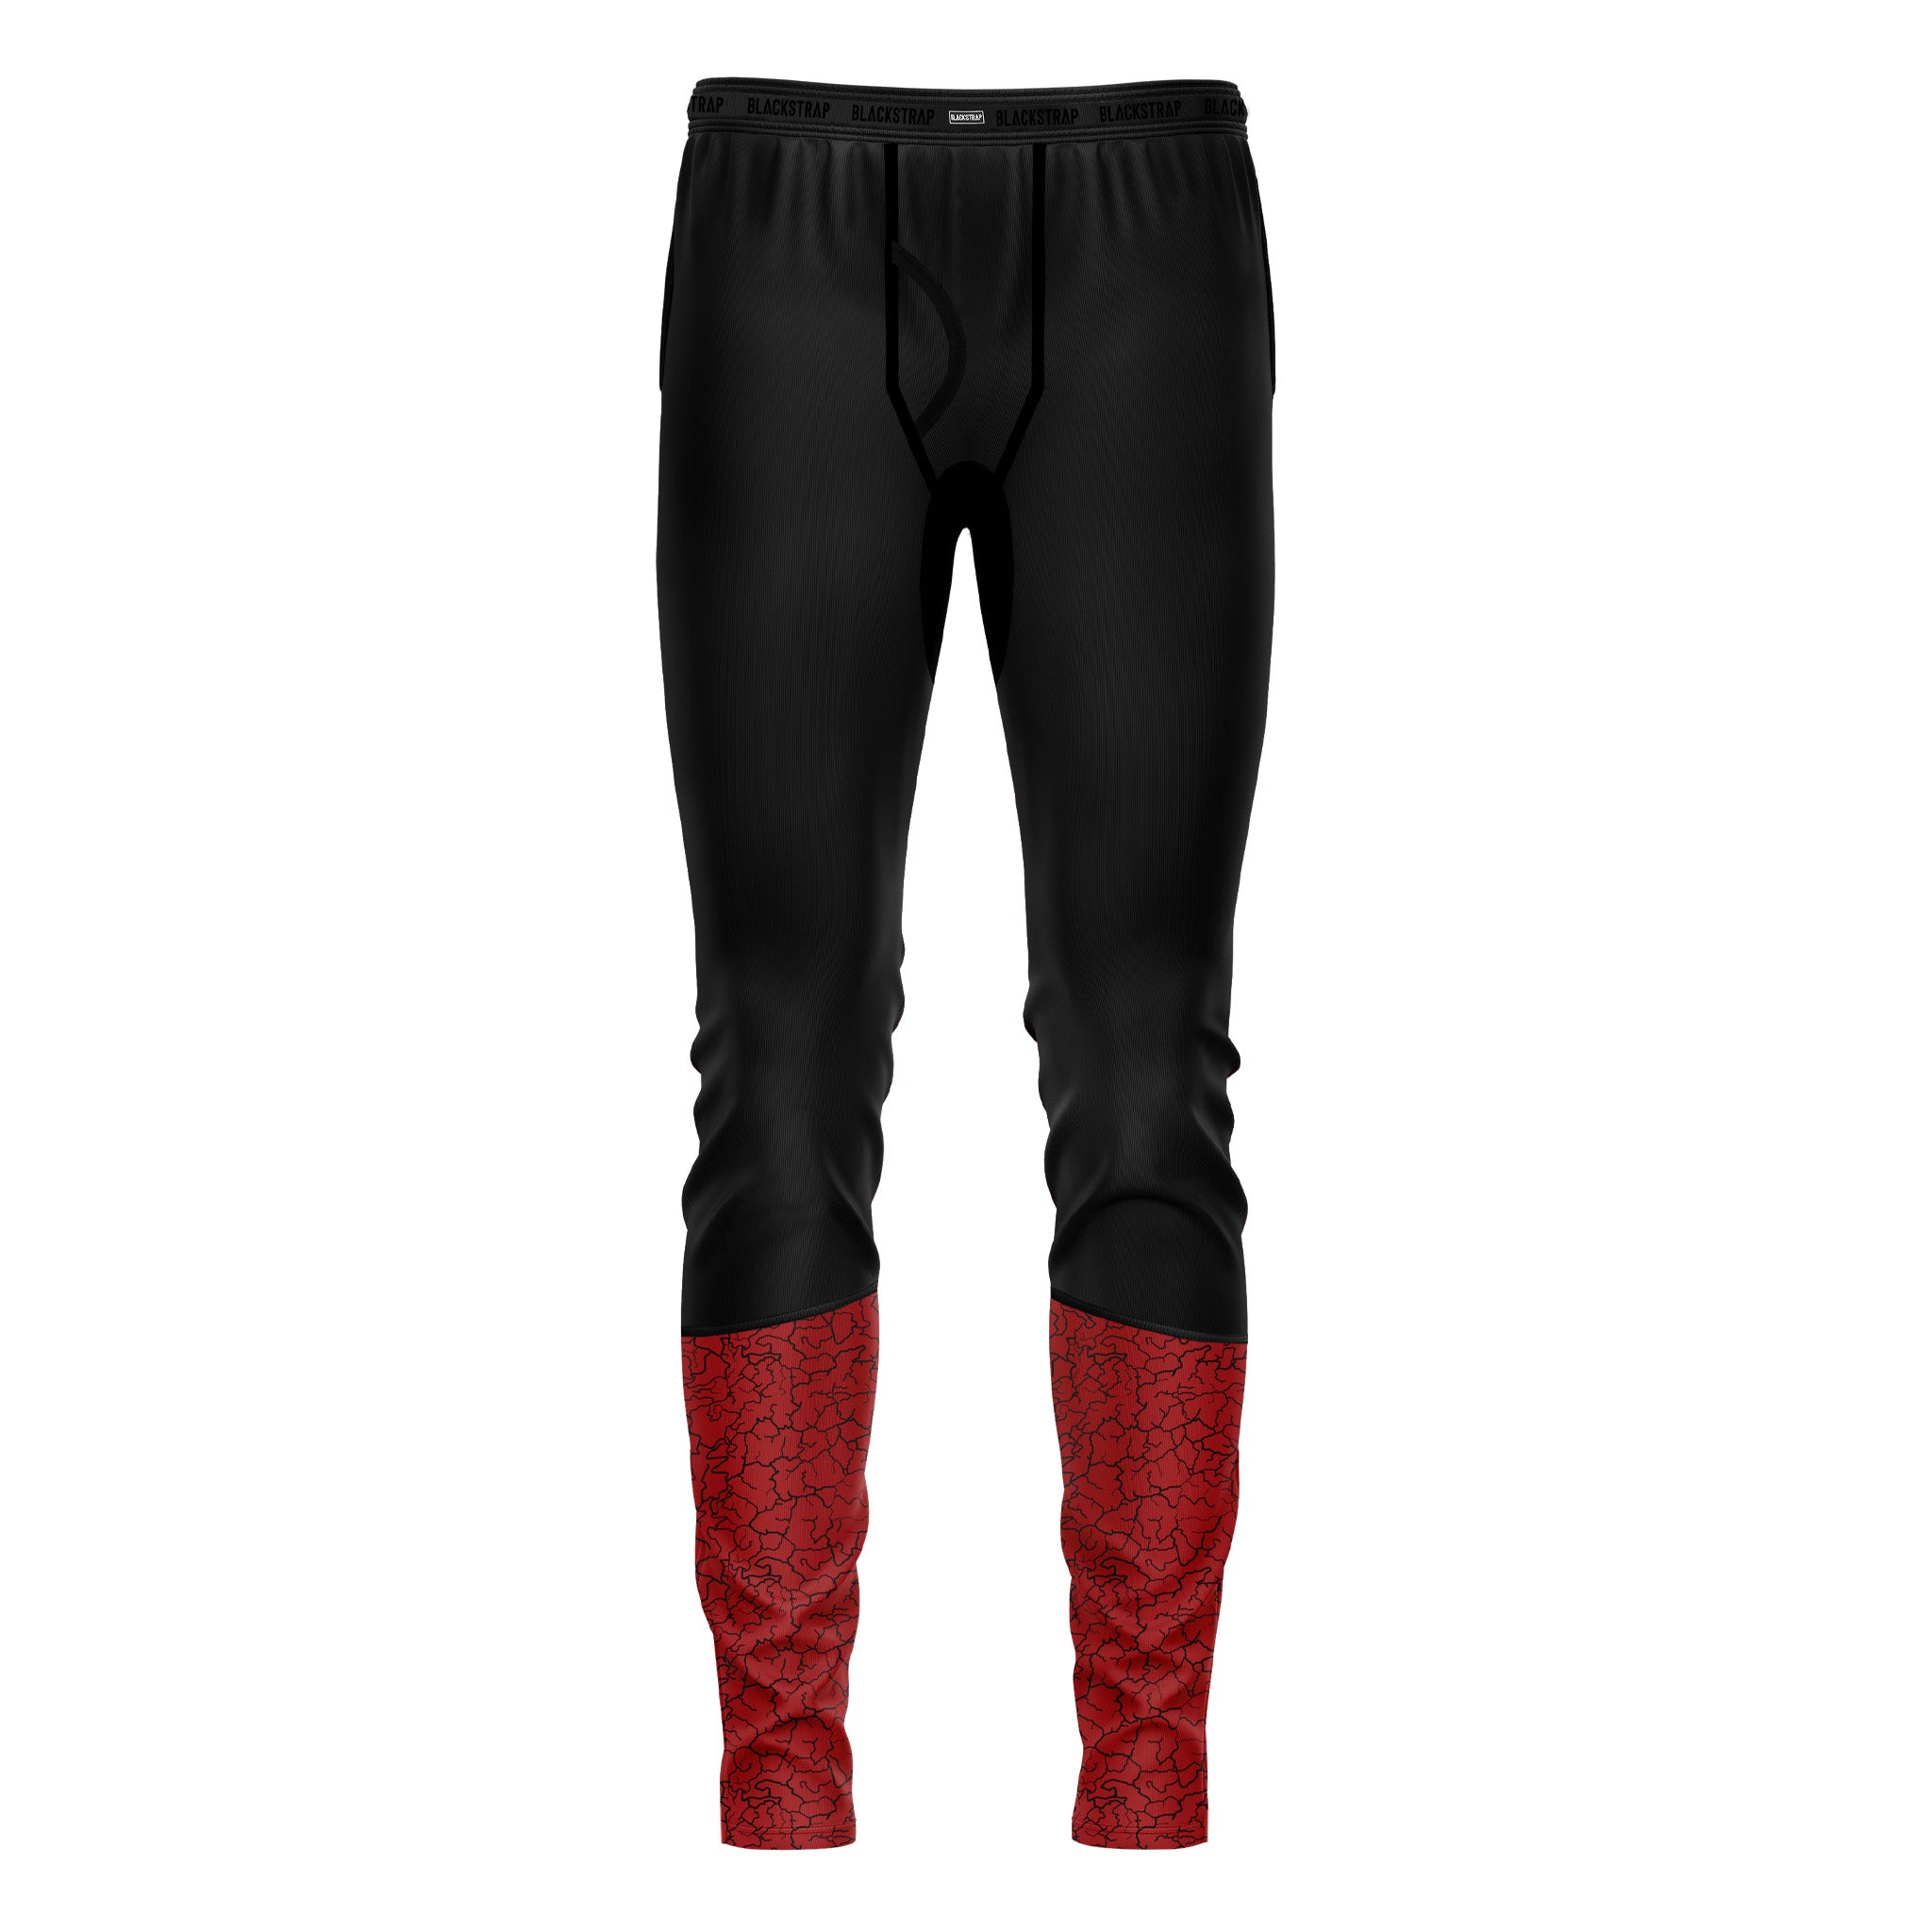 Men's Therma Base Layer Pants BlackStrap Magma Red S 